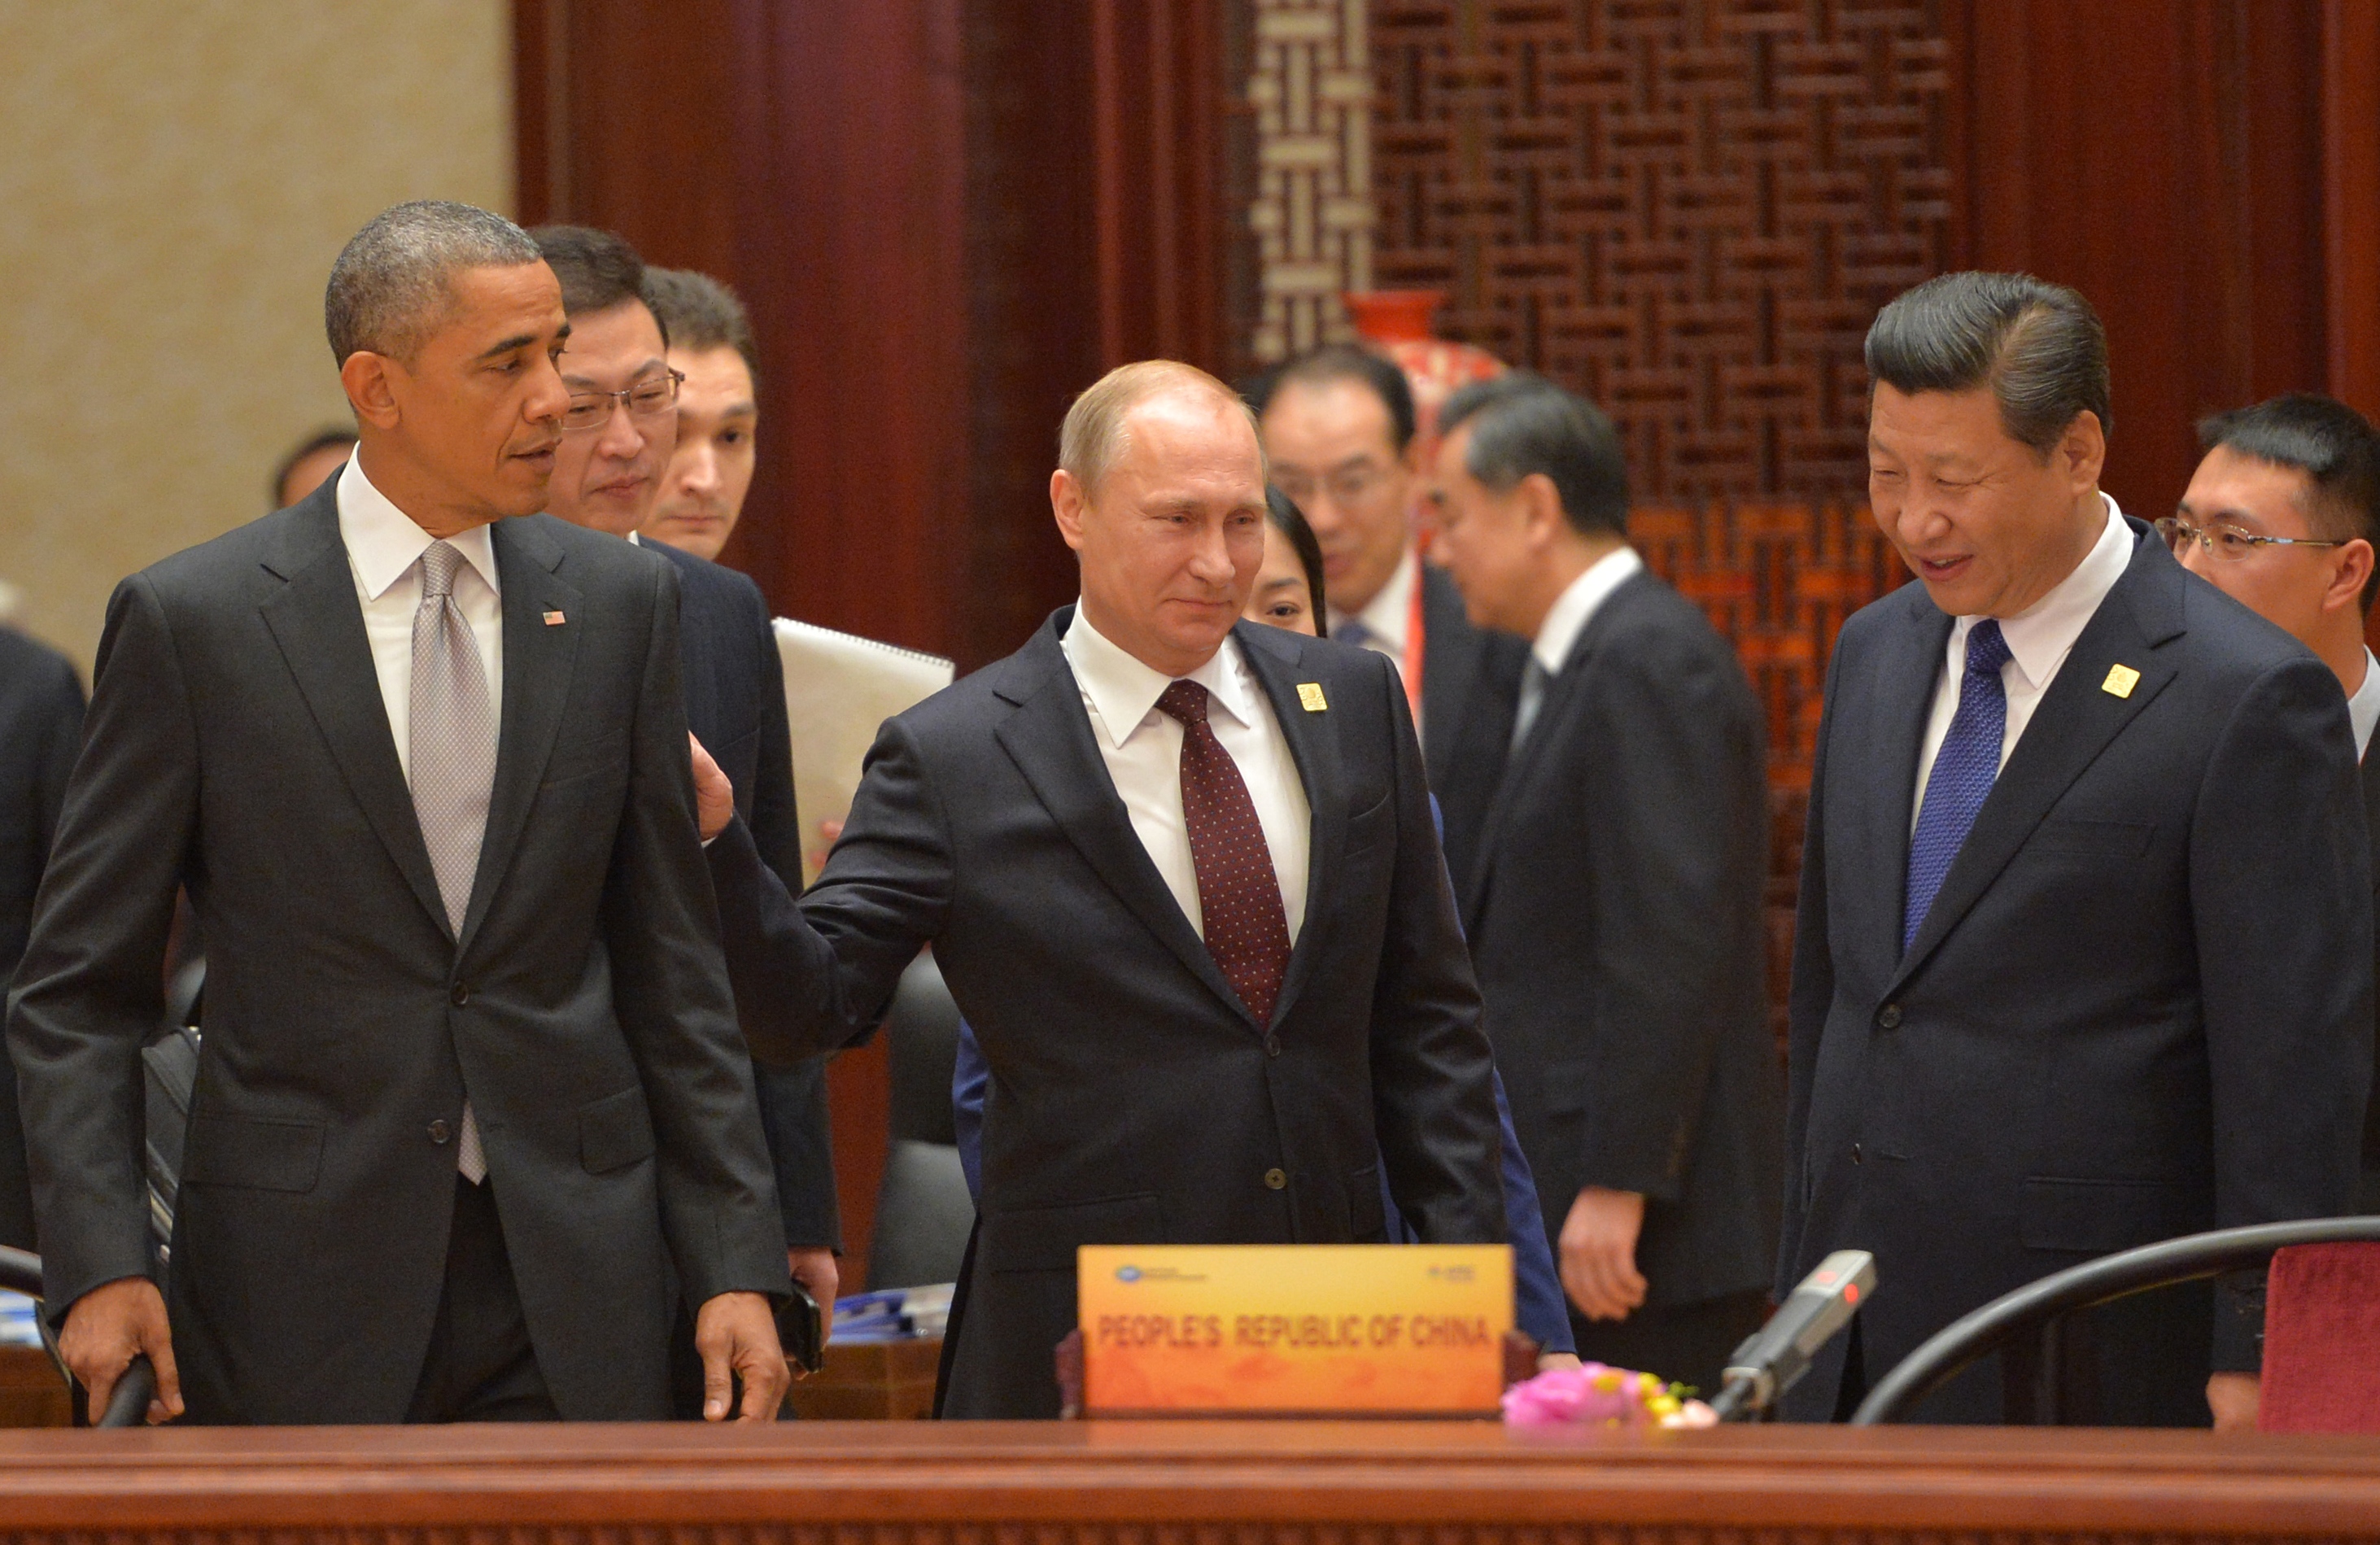 Vladimir Putin, Barack Obama, Xi Jinping